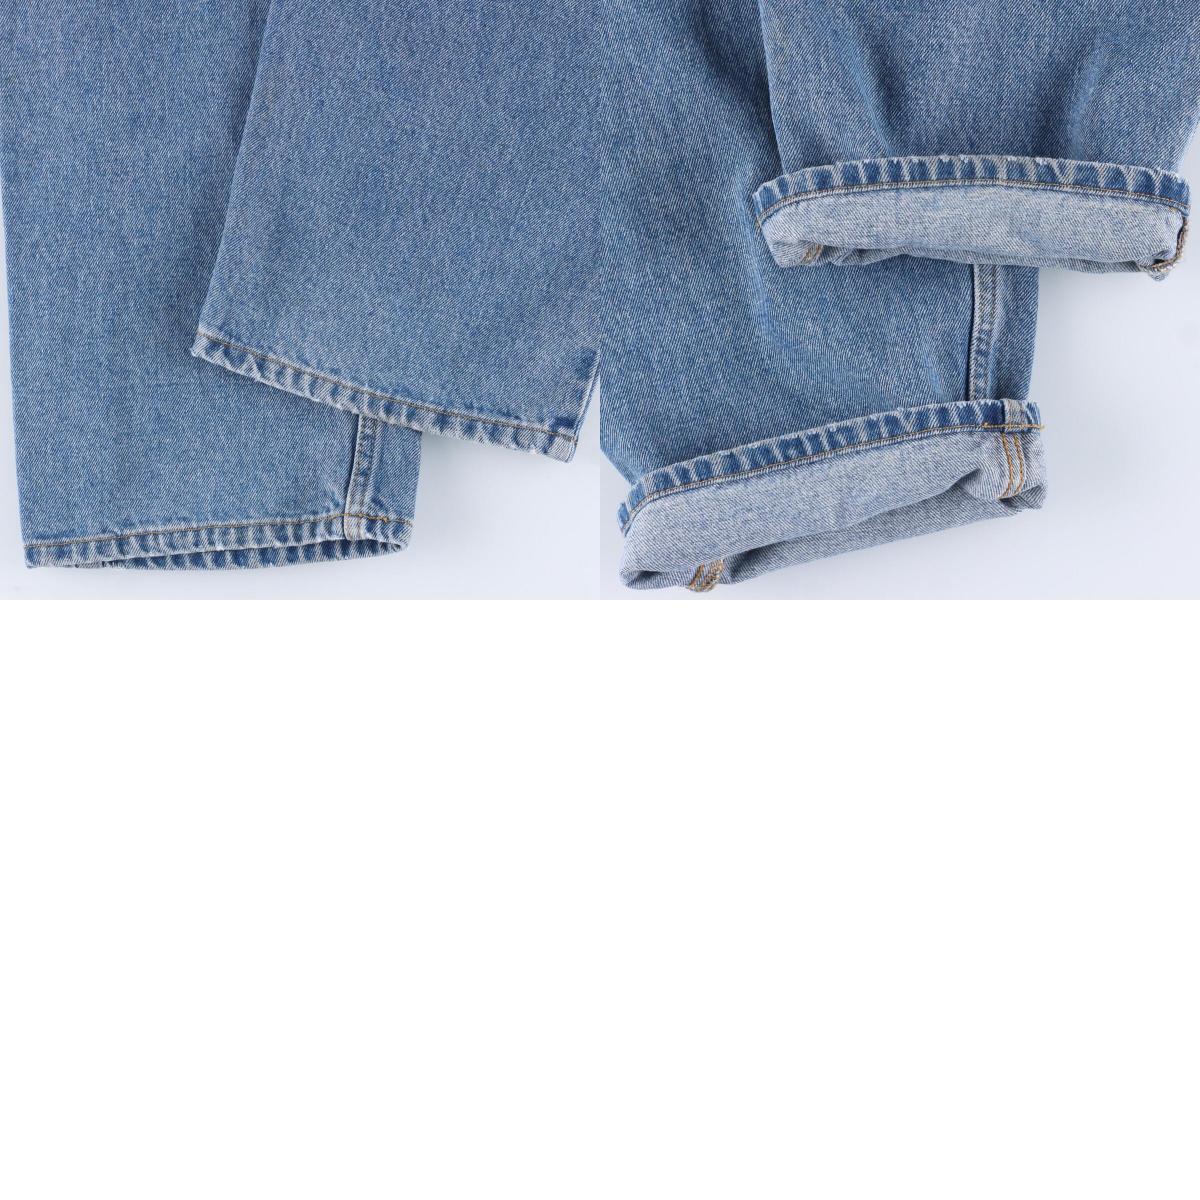  б/у одежда Ralph Lauren Ralph Lauren POLO JEANS COMPANY джинсы Denim брюки мужской w34 /eaa306398